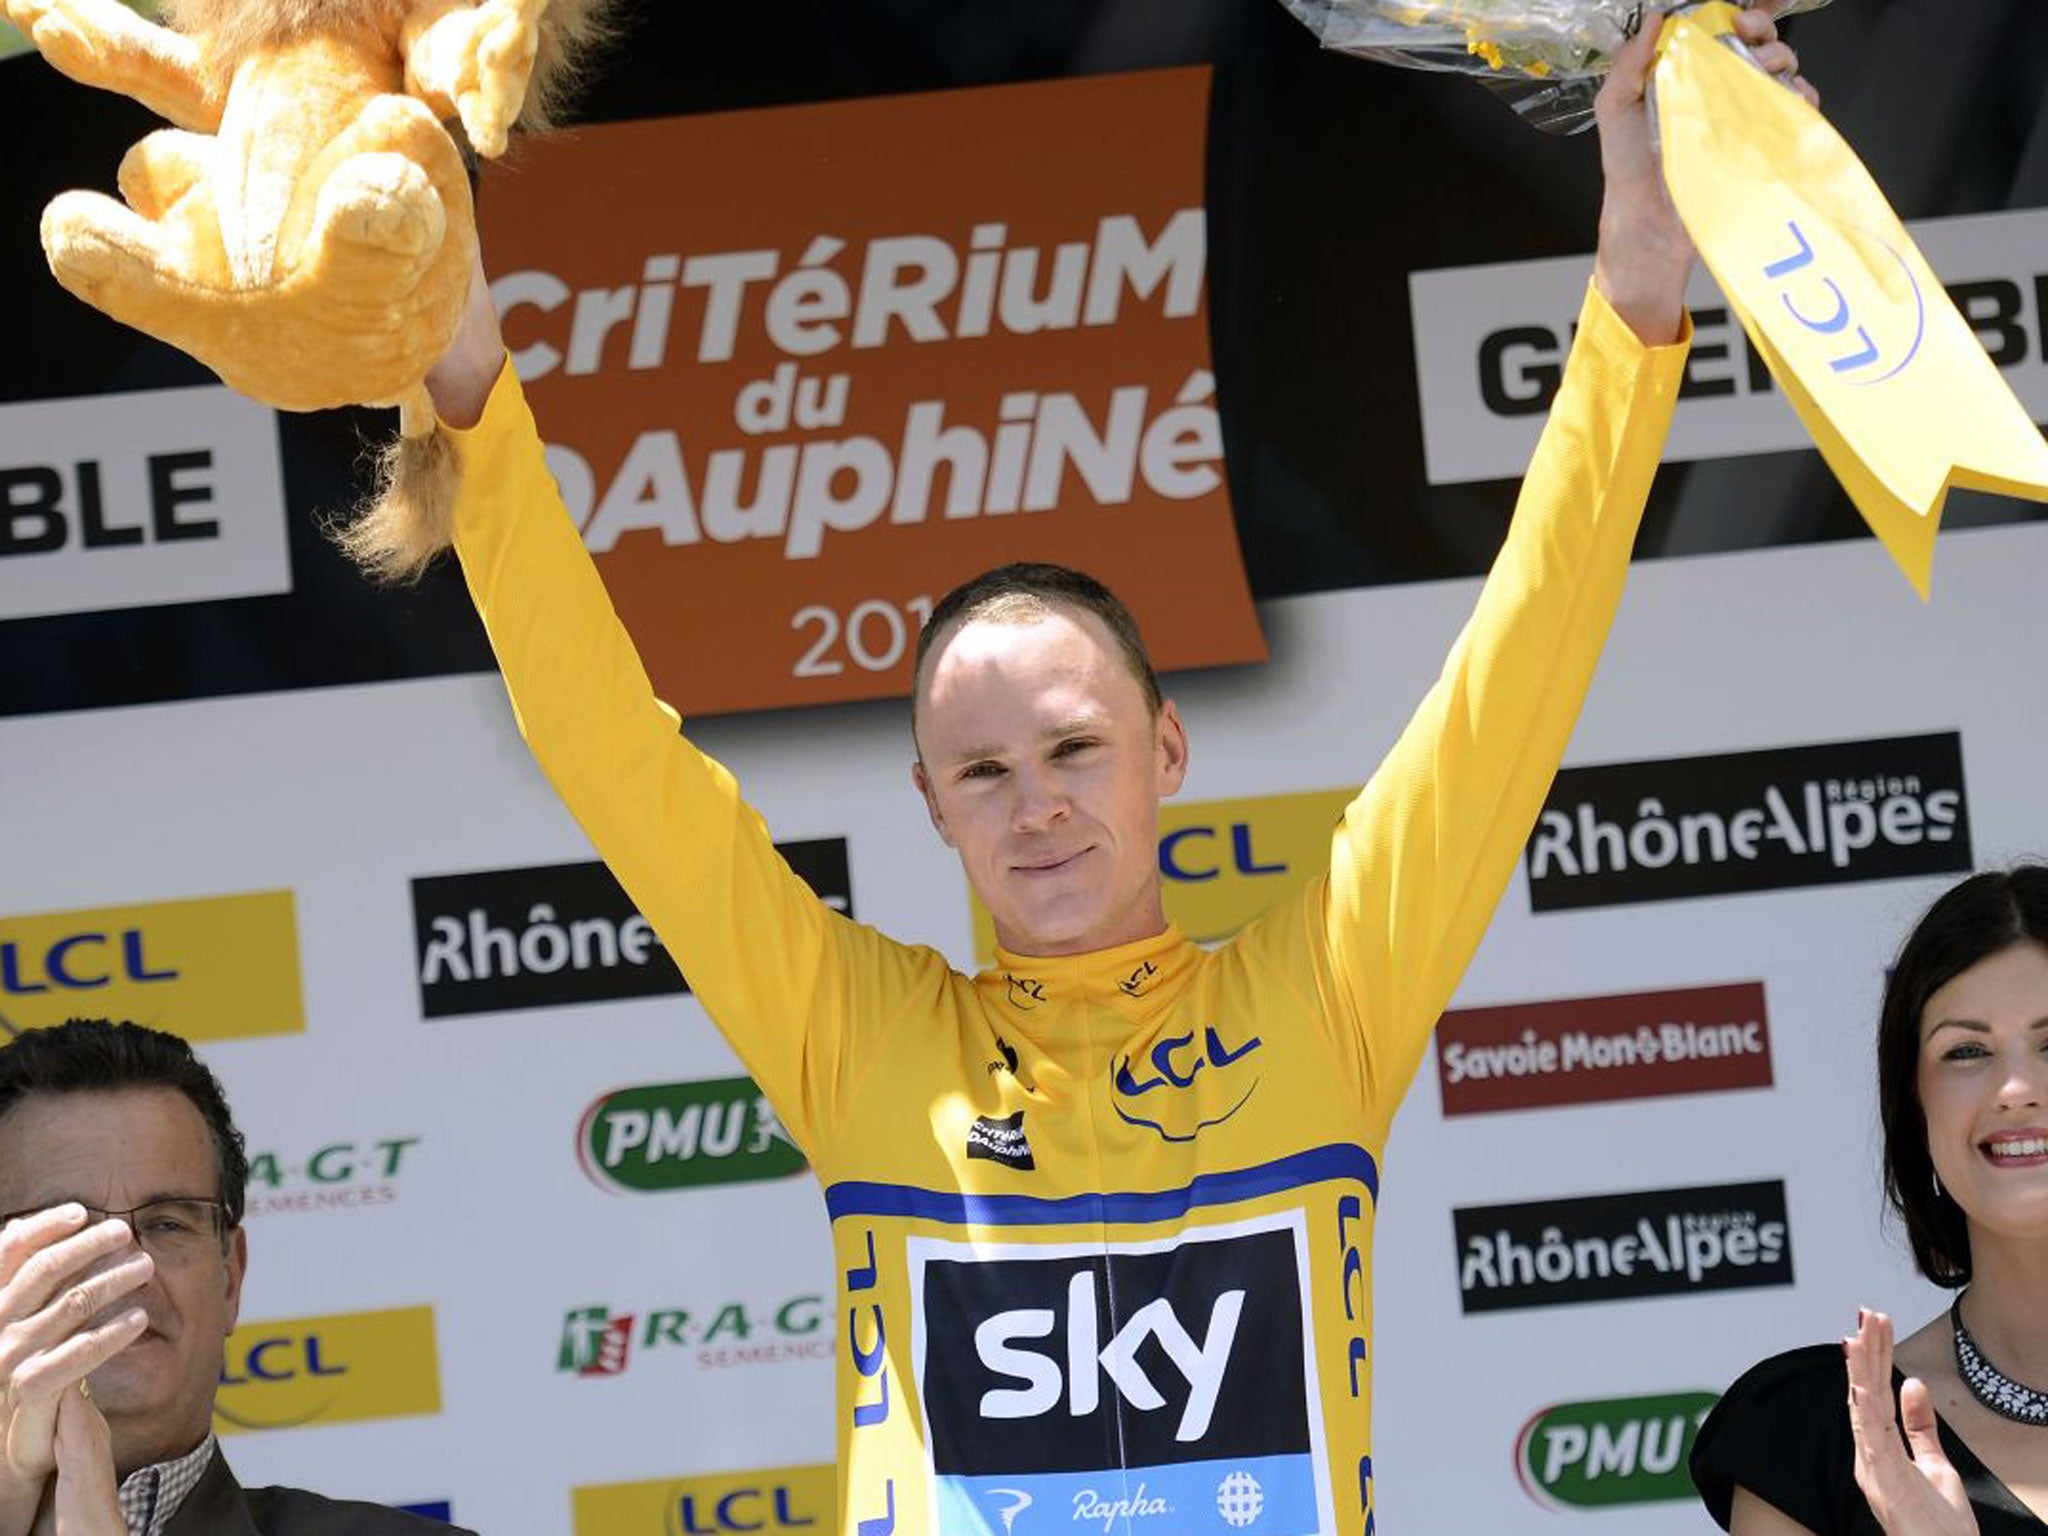 Chris Froome retained the lead in the Critérium du Dauphiné